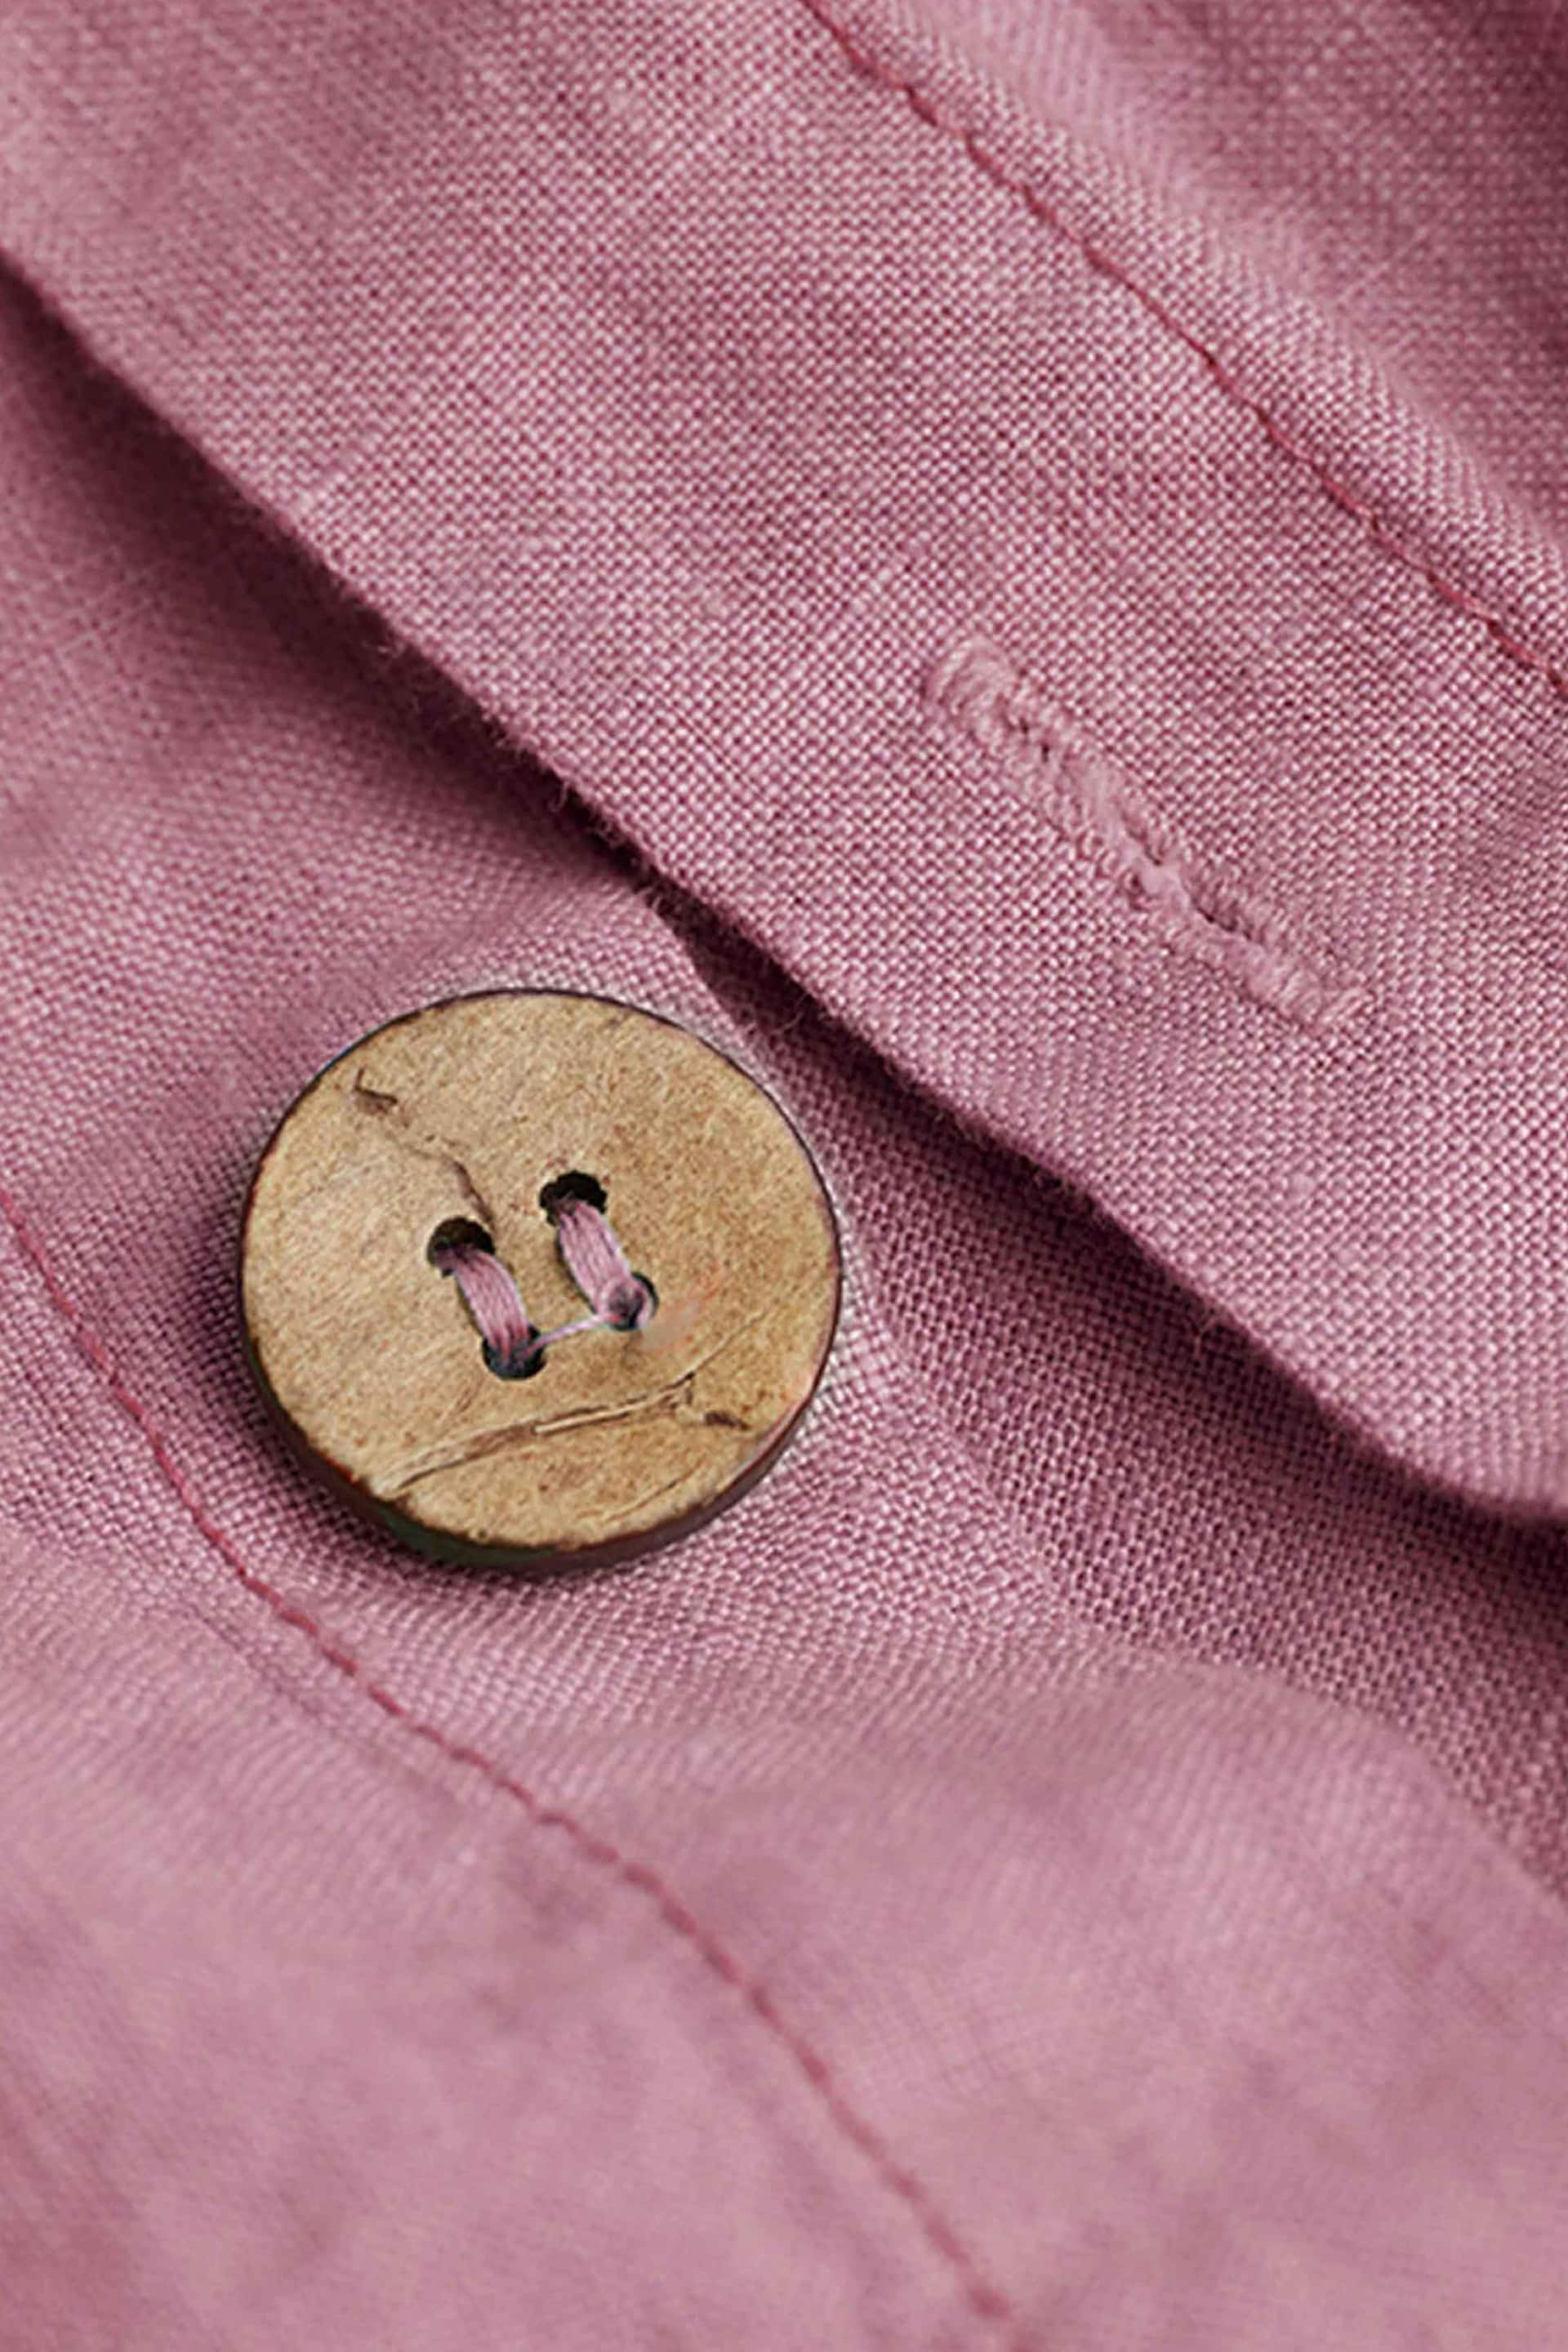 Piglet in Bed Raspberry Linen Duvet Cover - Image 3 of 4